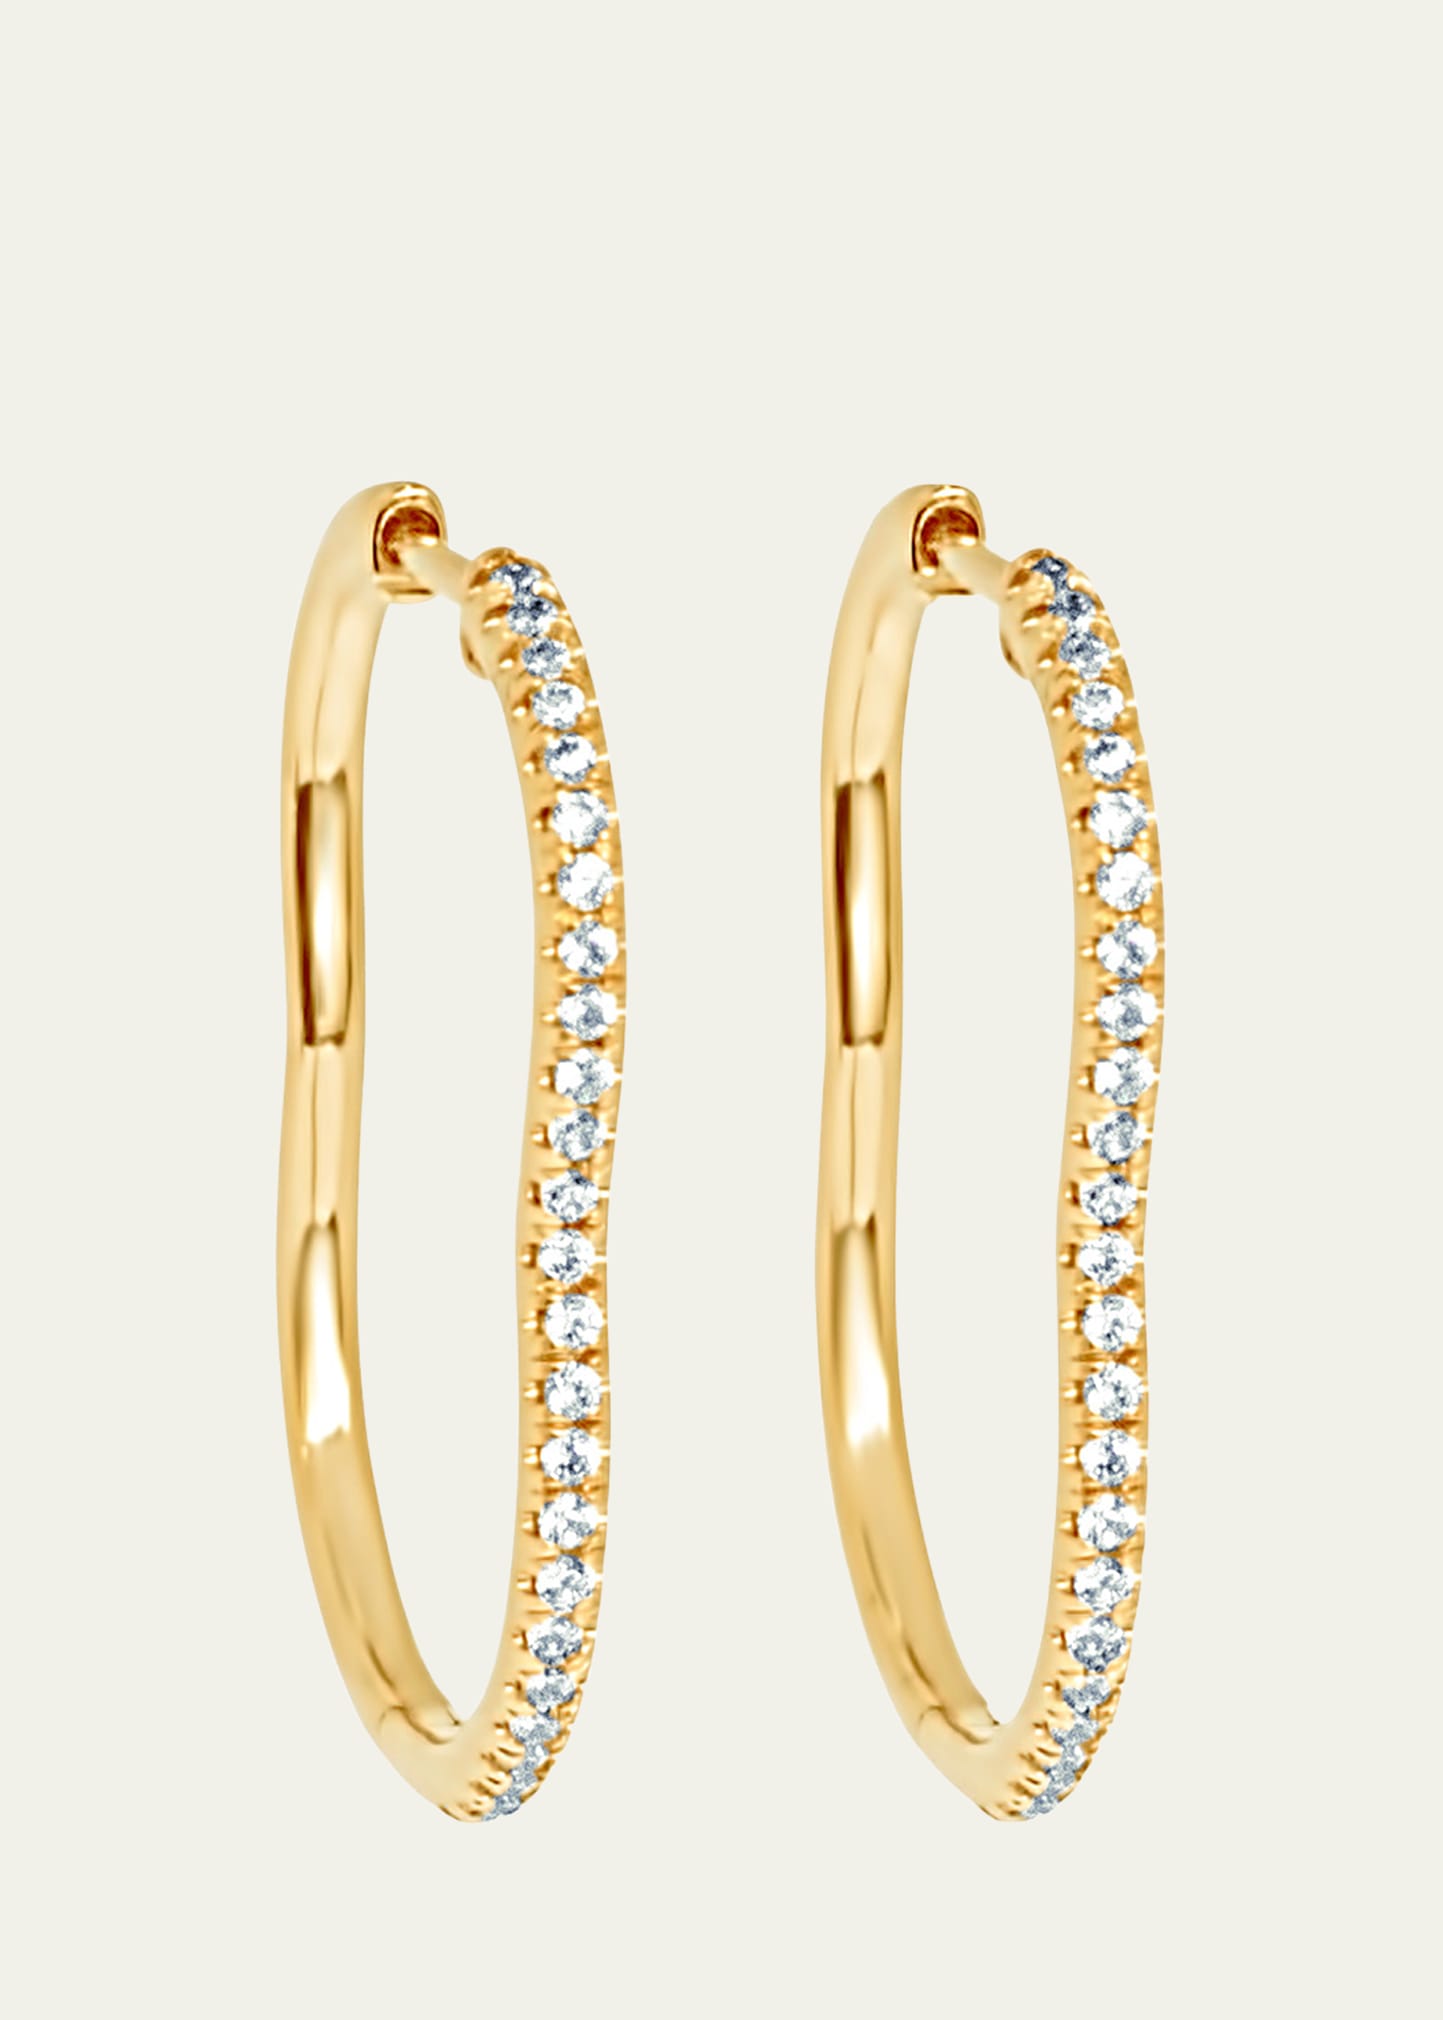 18K Yellow Gold Berceau Pave Diamond Hoop Earrings, 0.44 tcw